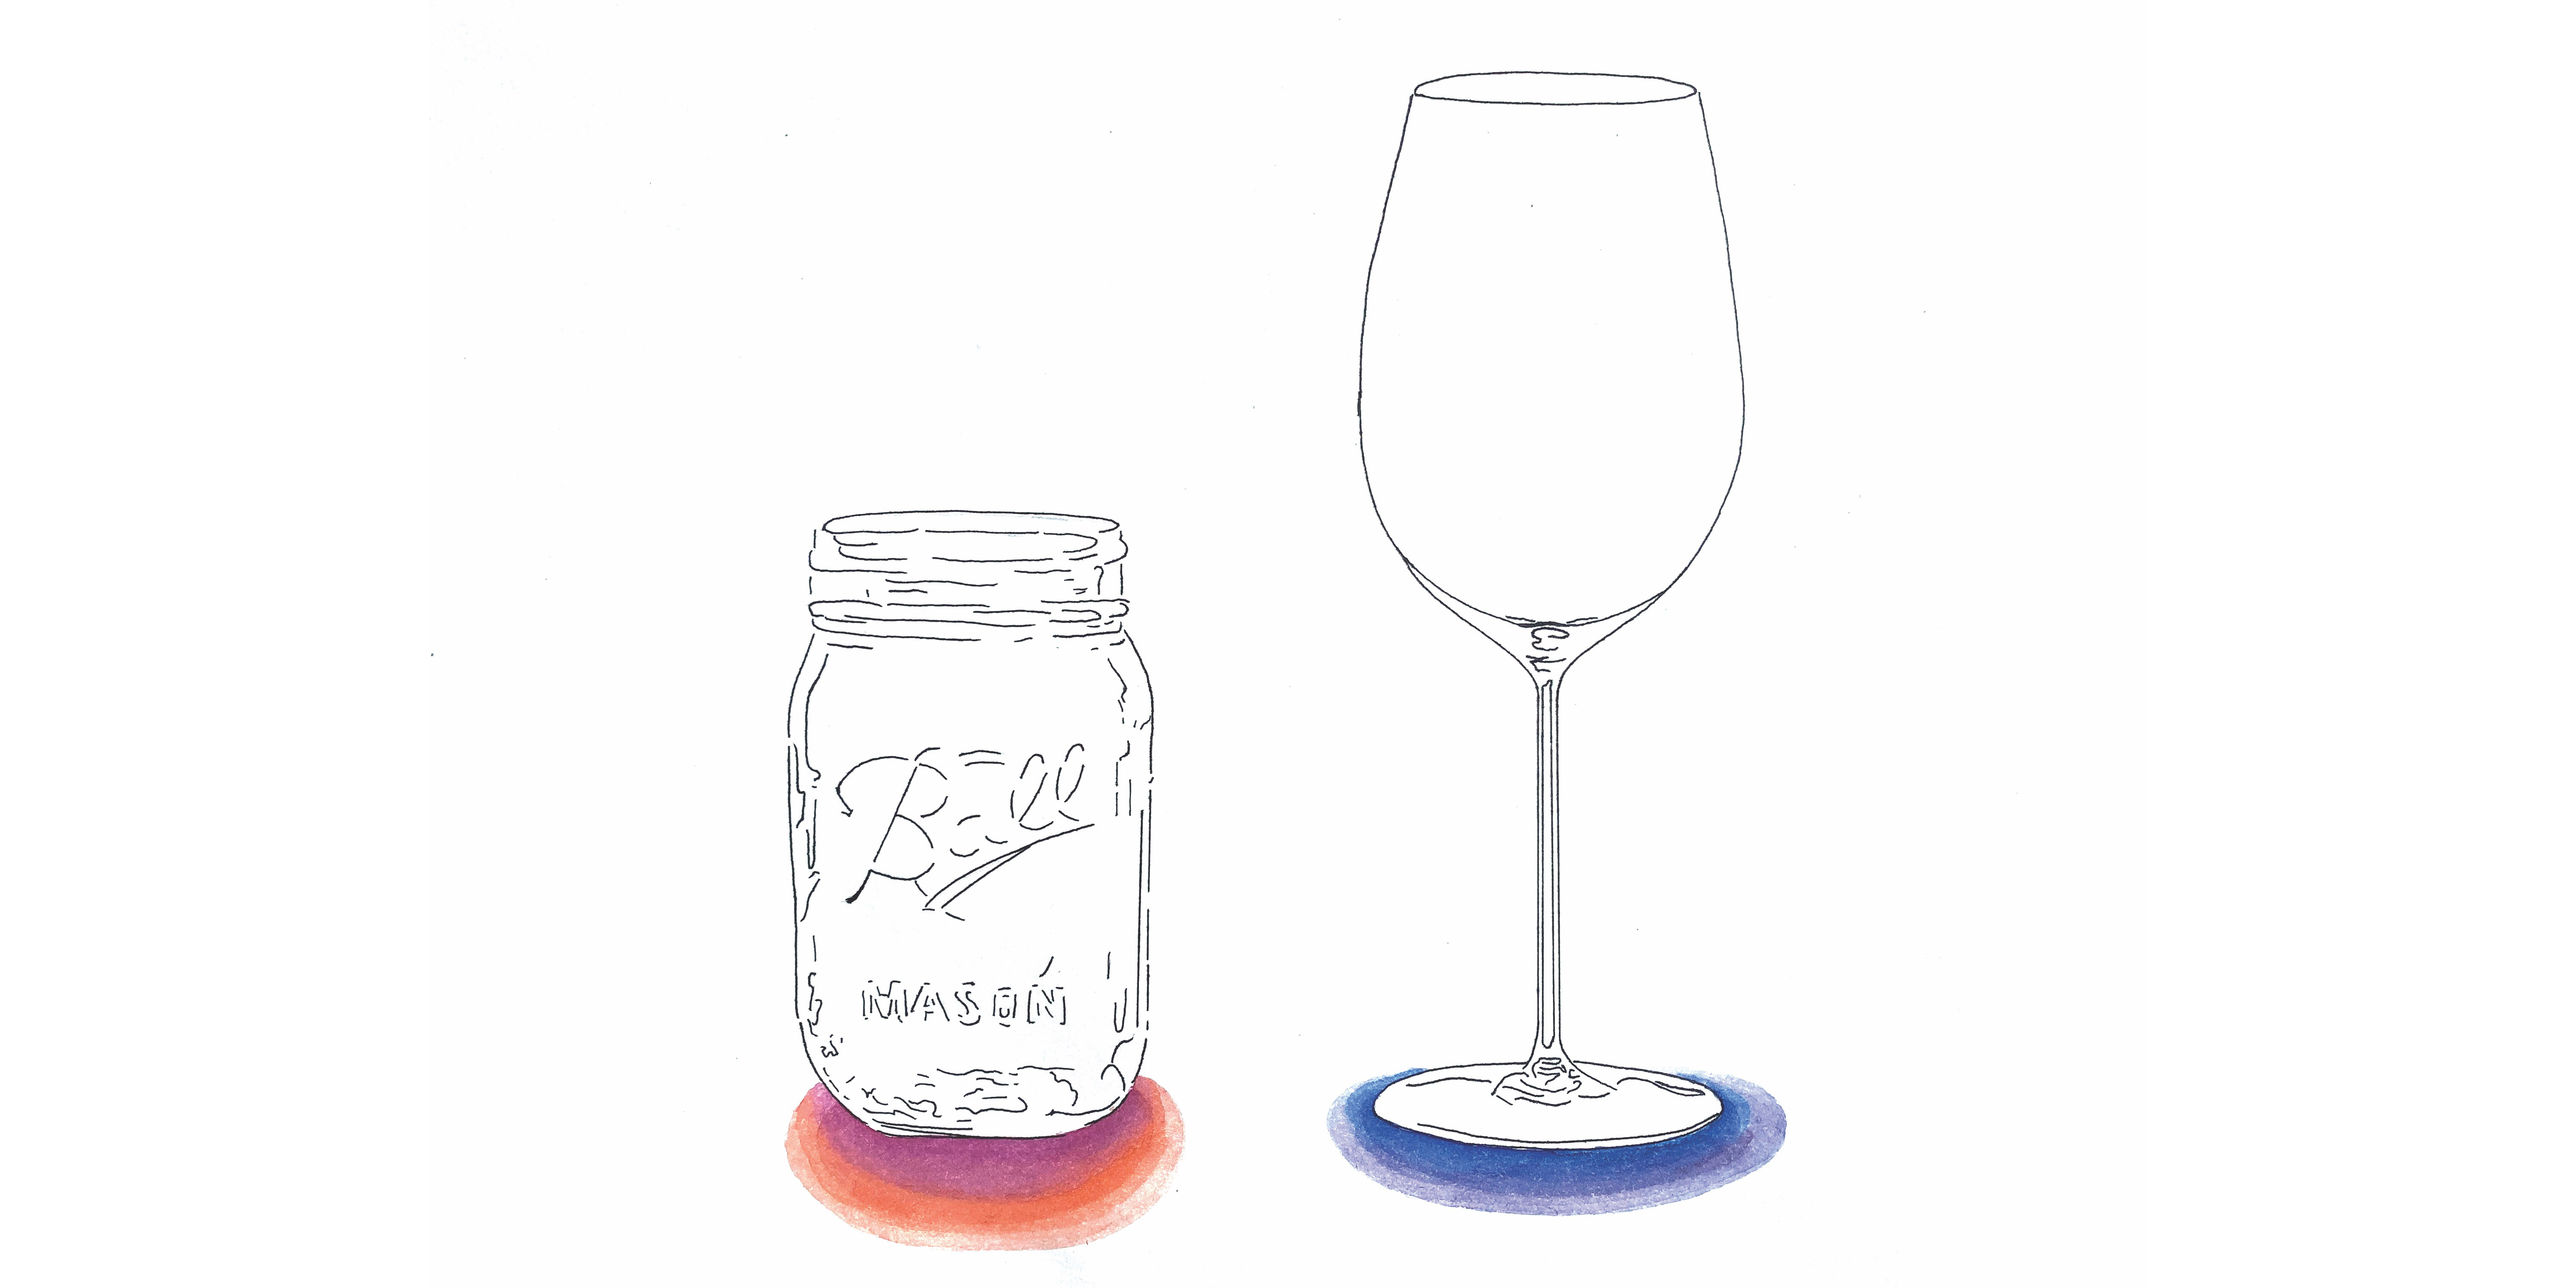 Wine Glasses or Mason Jars: What's Best for Wine? - Sunset Magazine